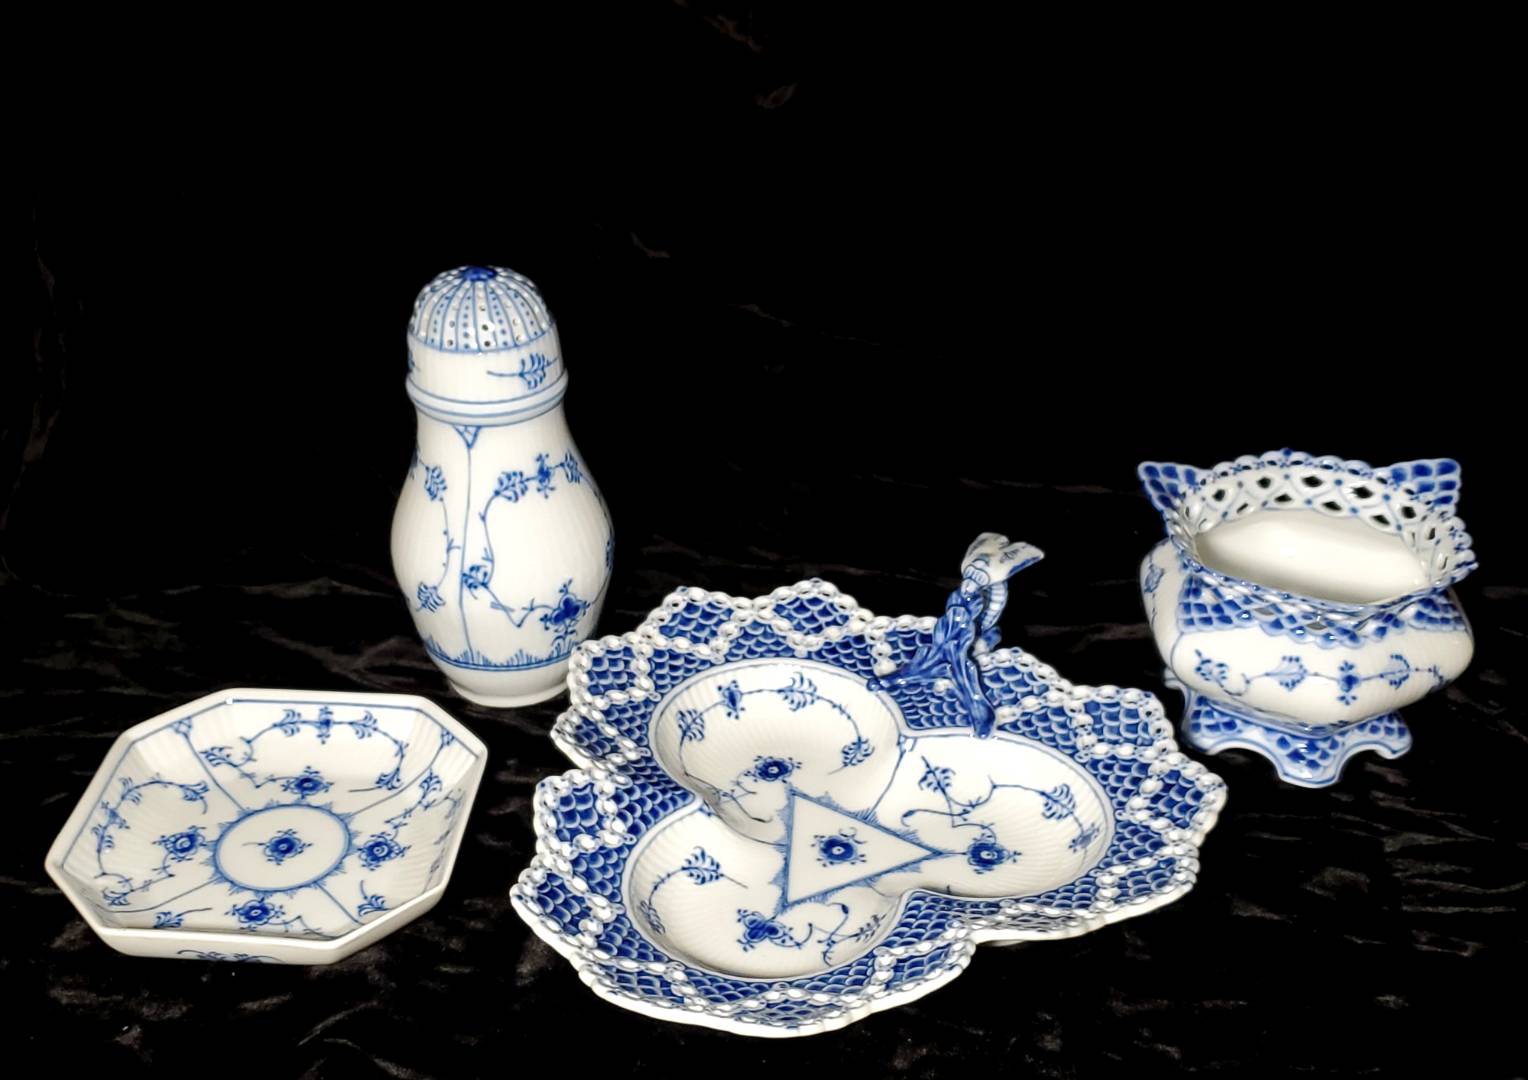 Categories: Royal Copenhagen Blue Fluted Plain history mix mug